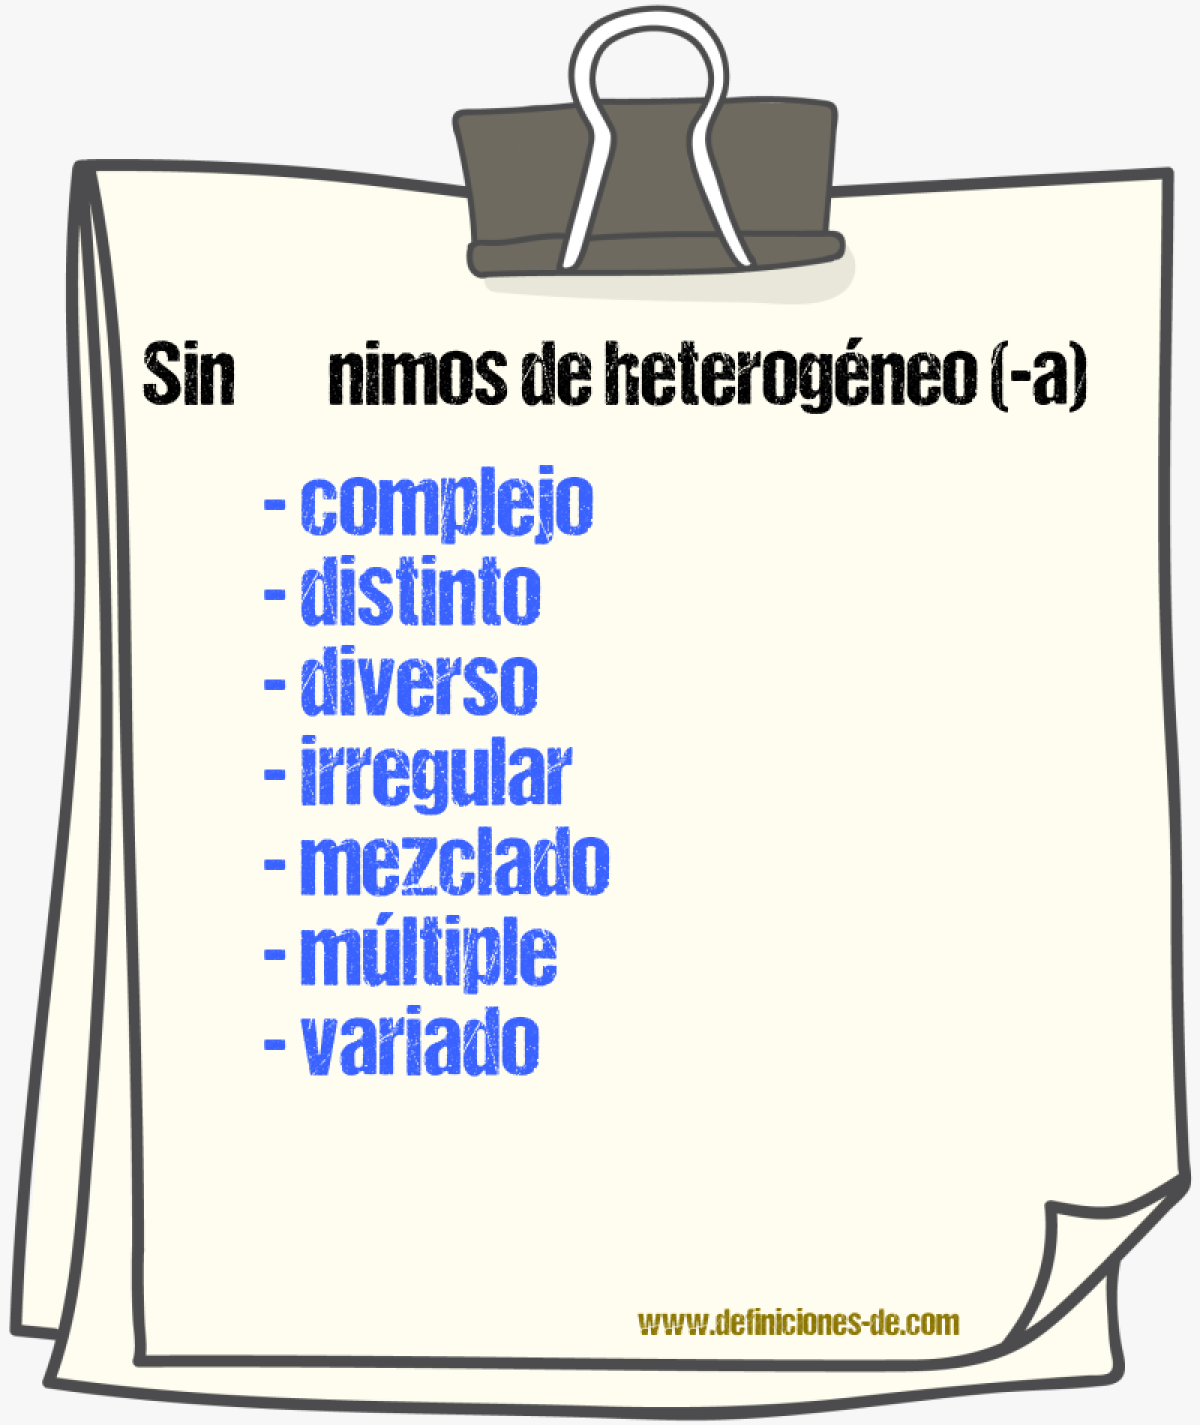 Sinónimos de heterogéneo